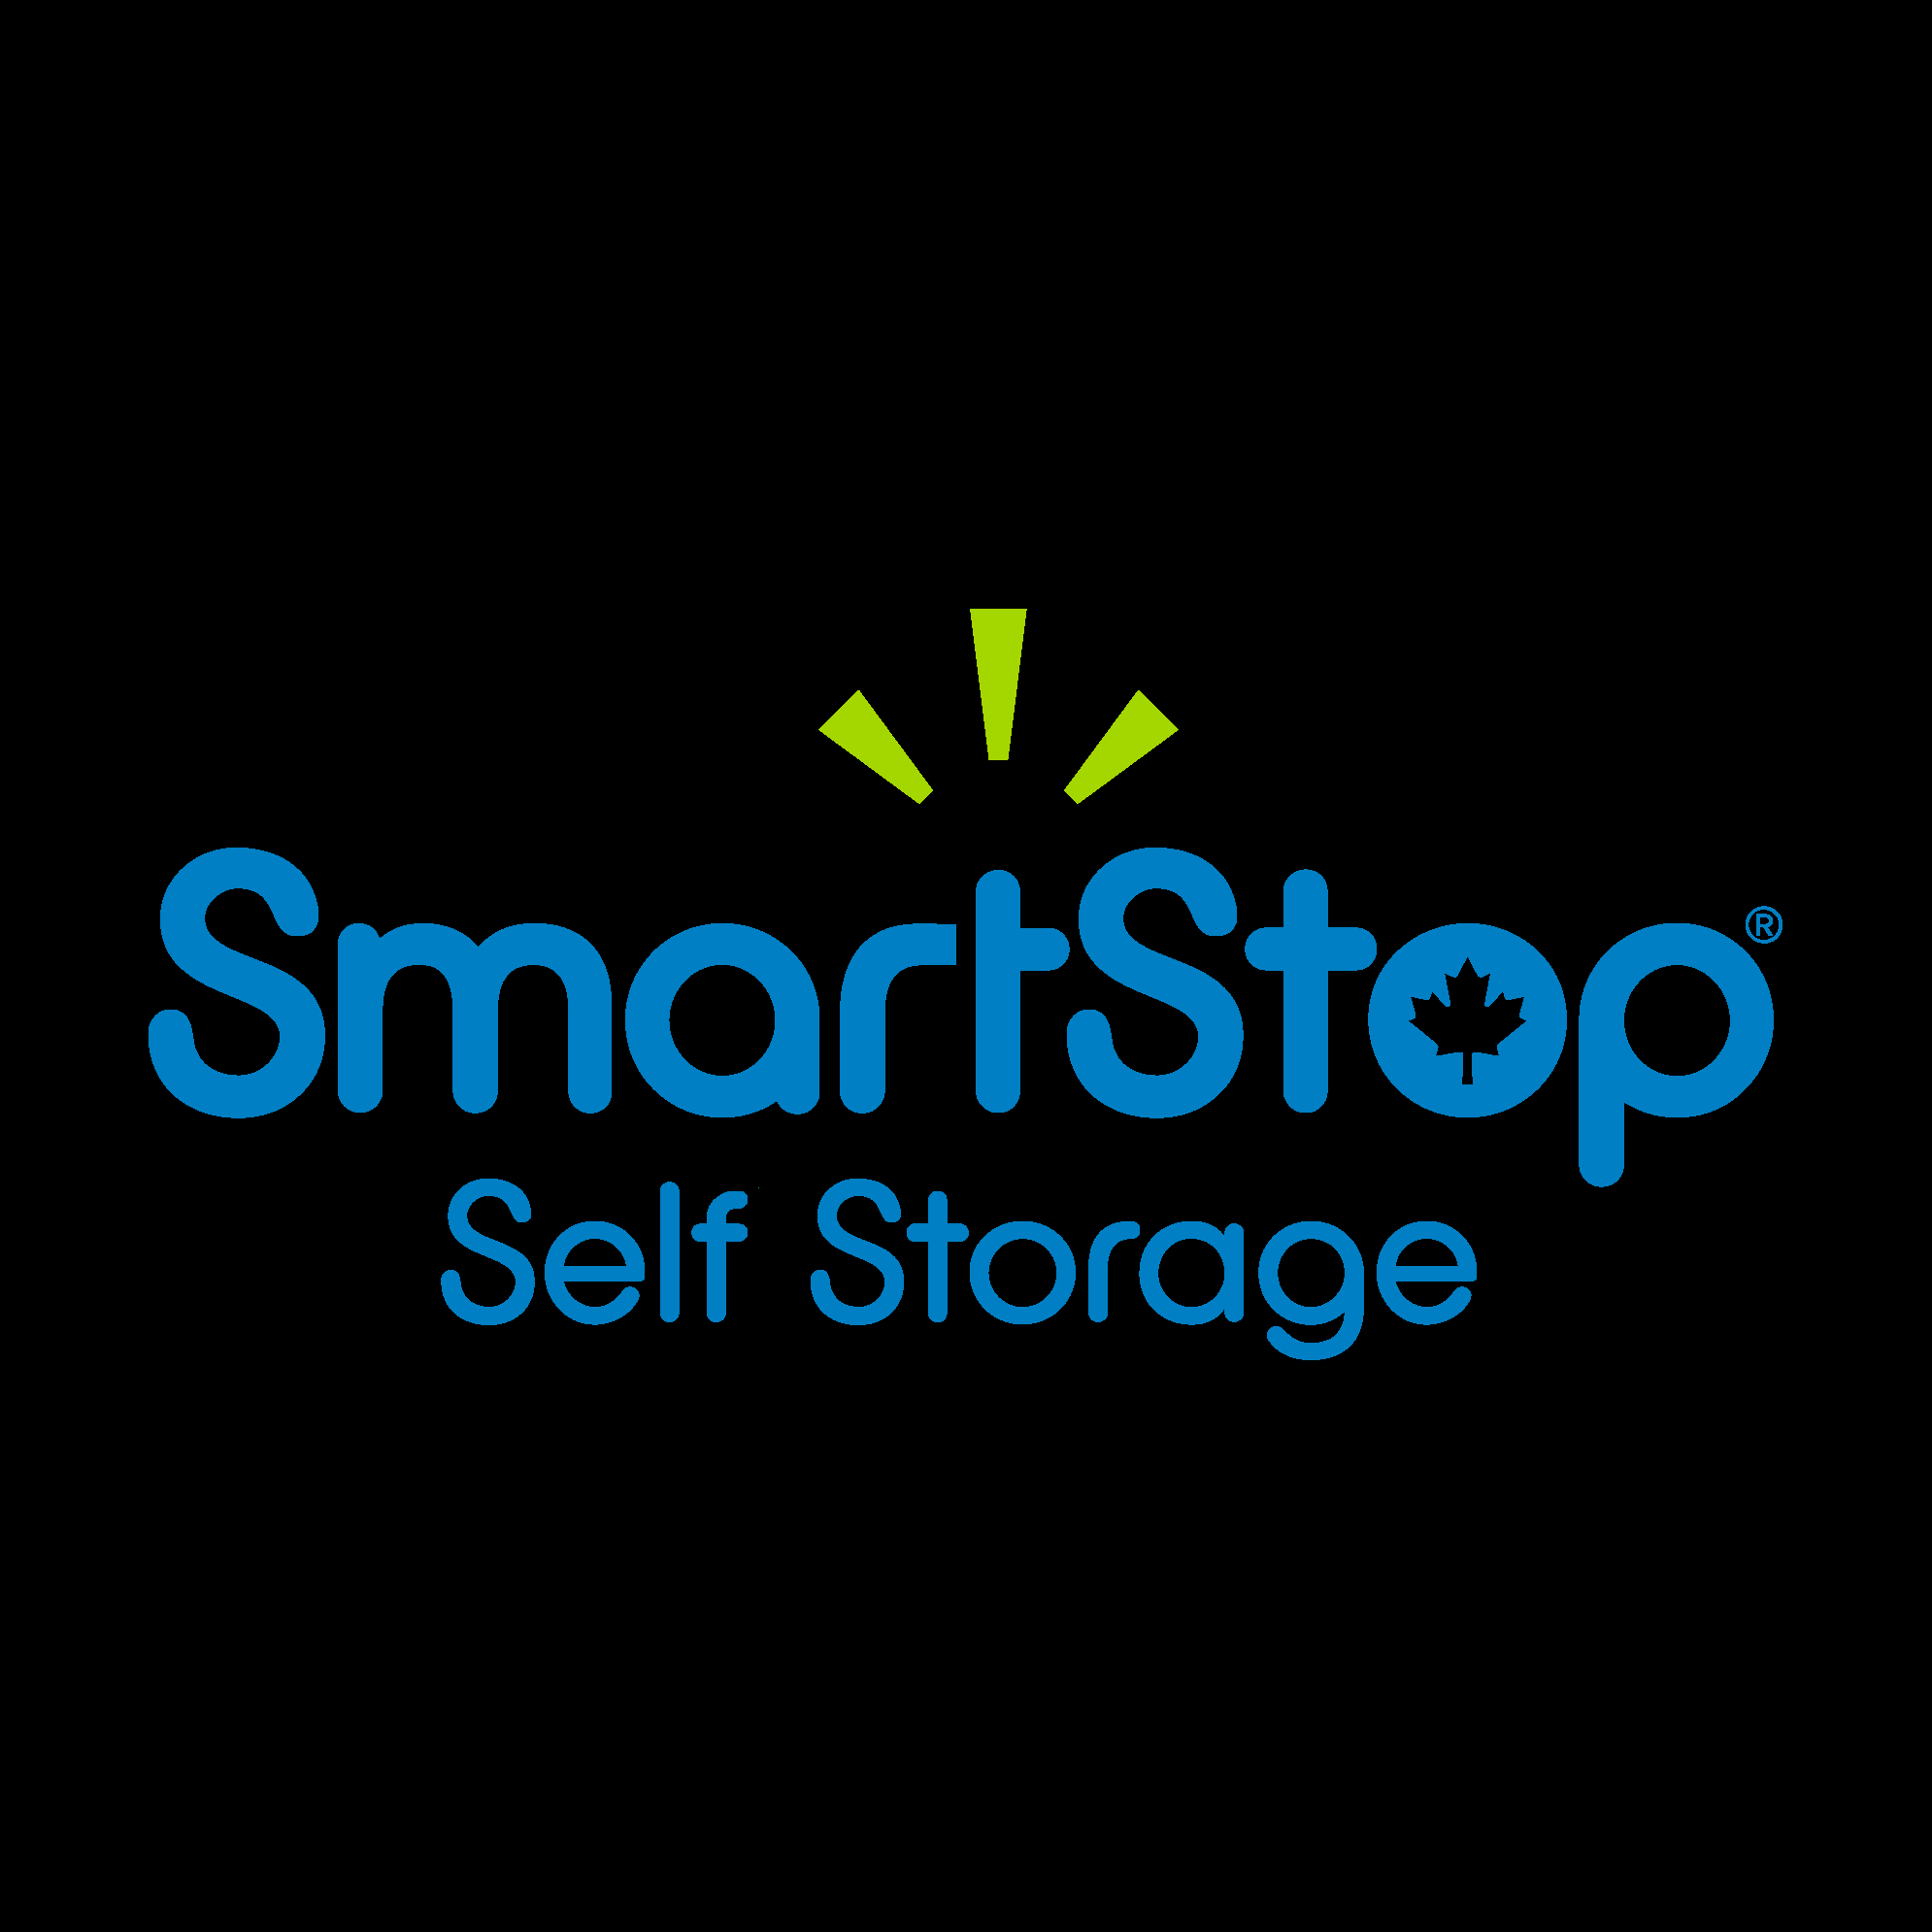 SmartStop Self Storage - Whitby - Self-Storage